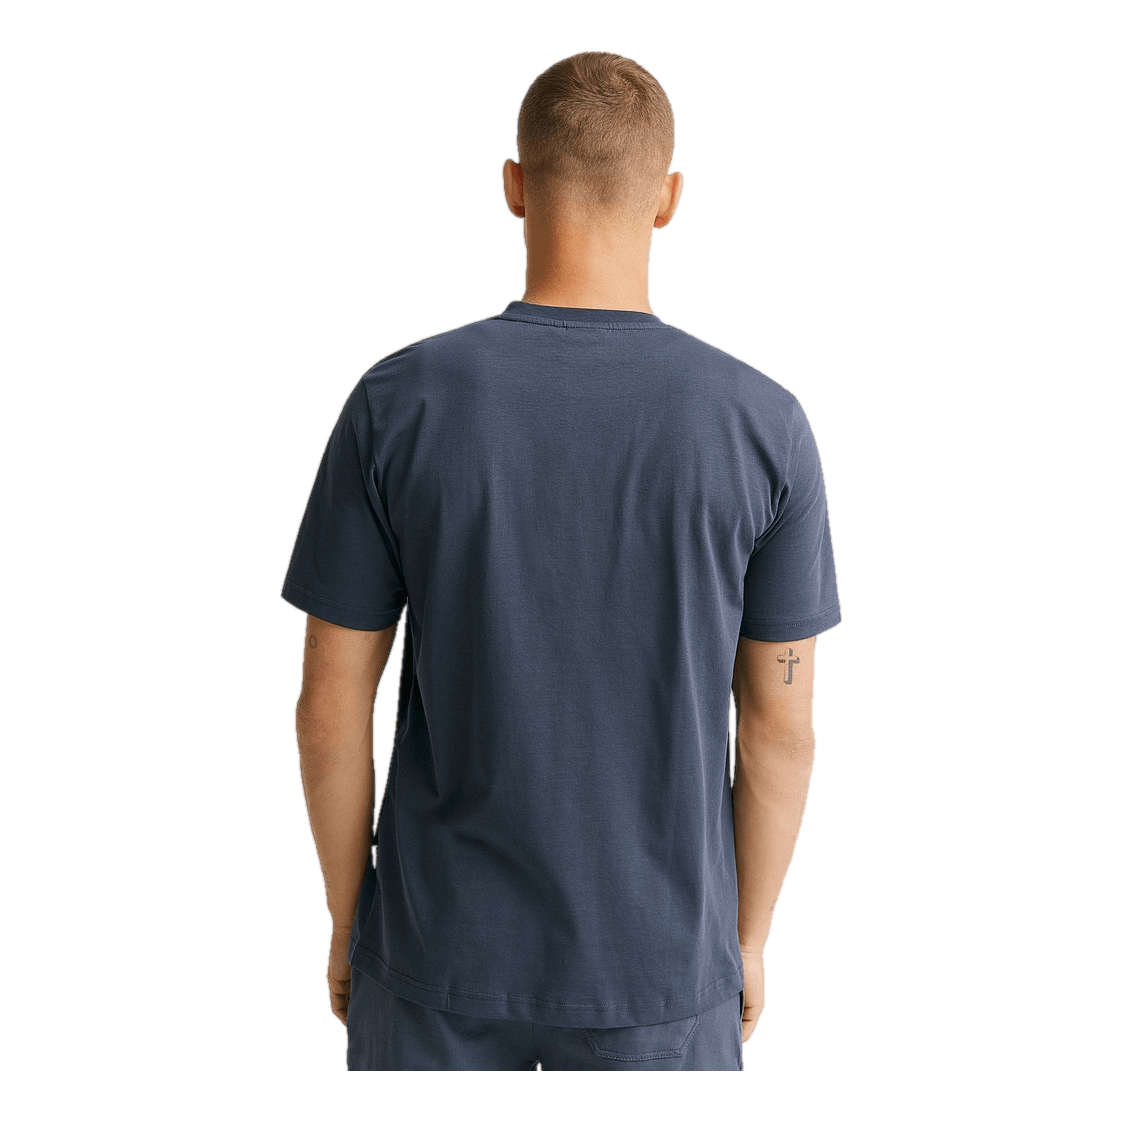 Mercury T-shirt Typhoon Blue